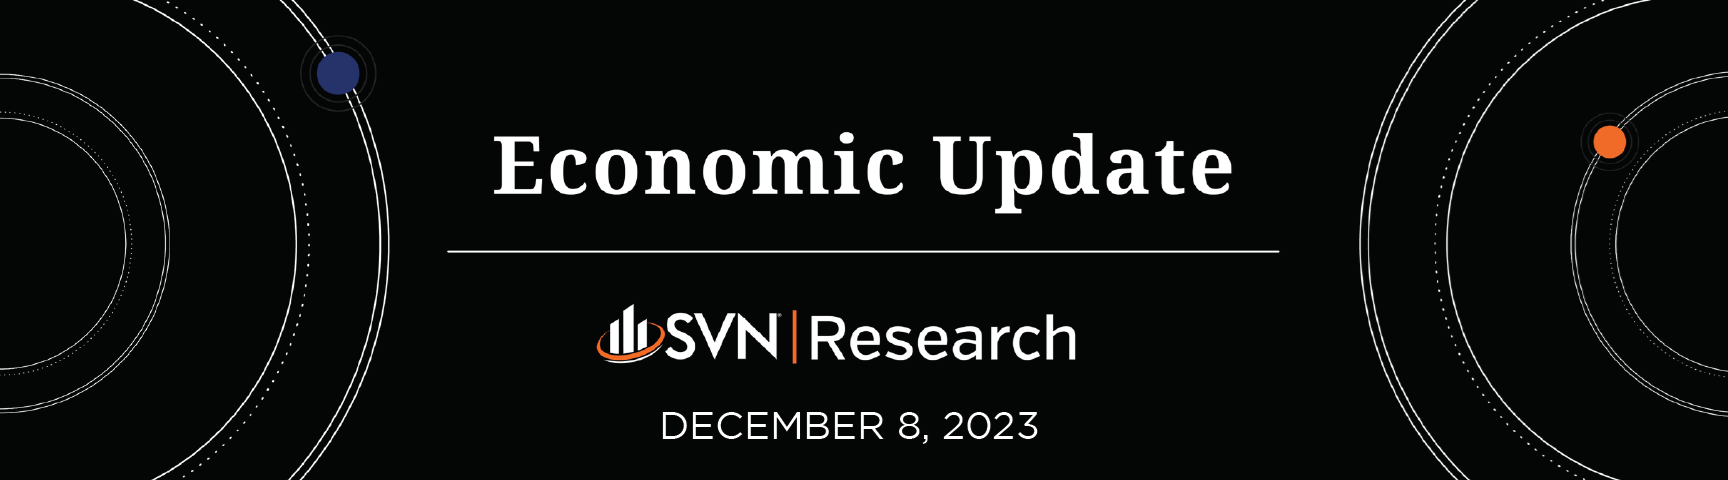 SVN | Research Economic Update 12.08.2023